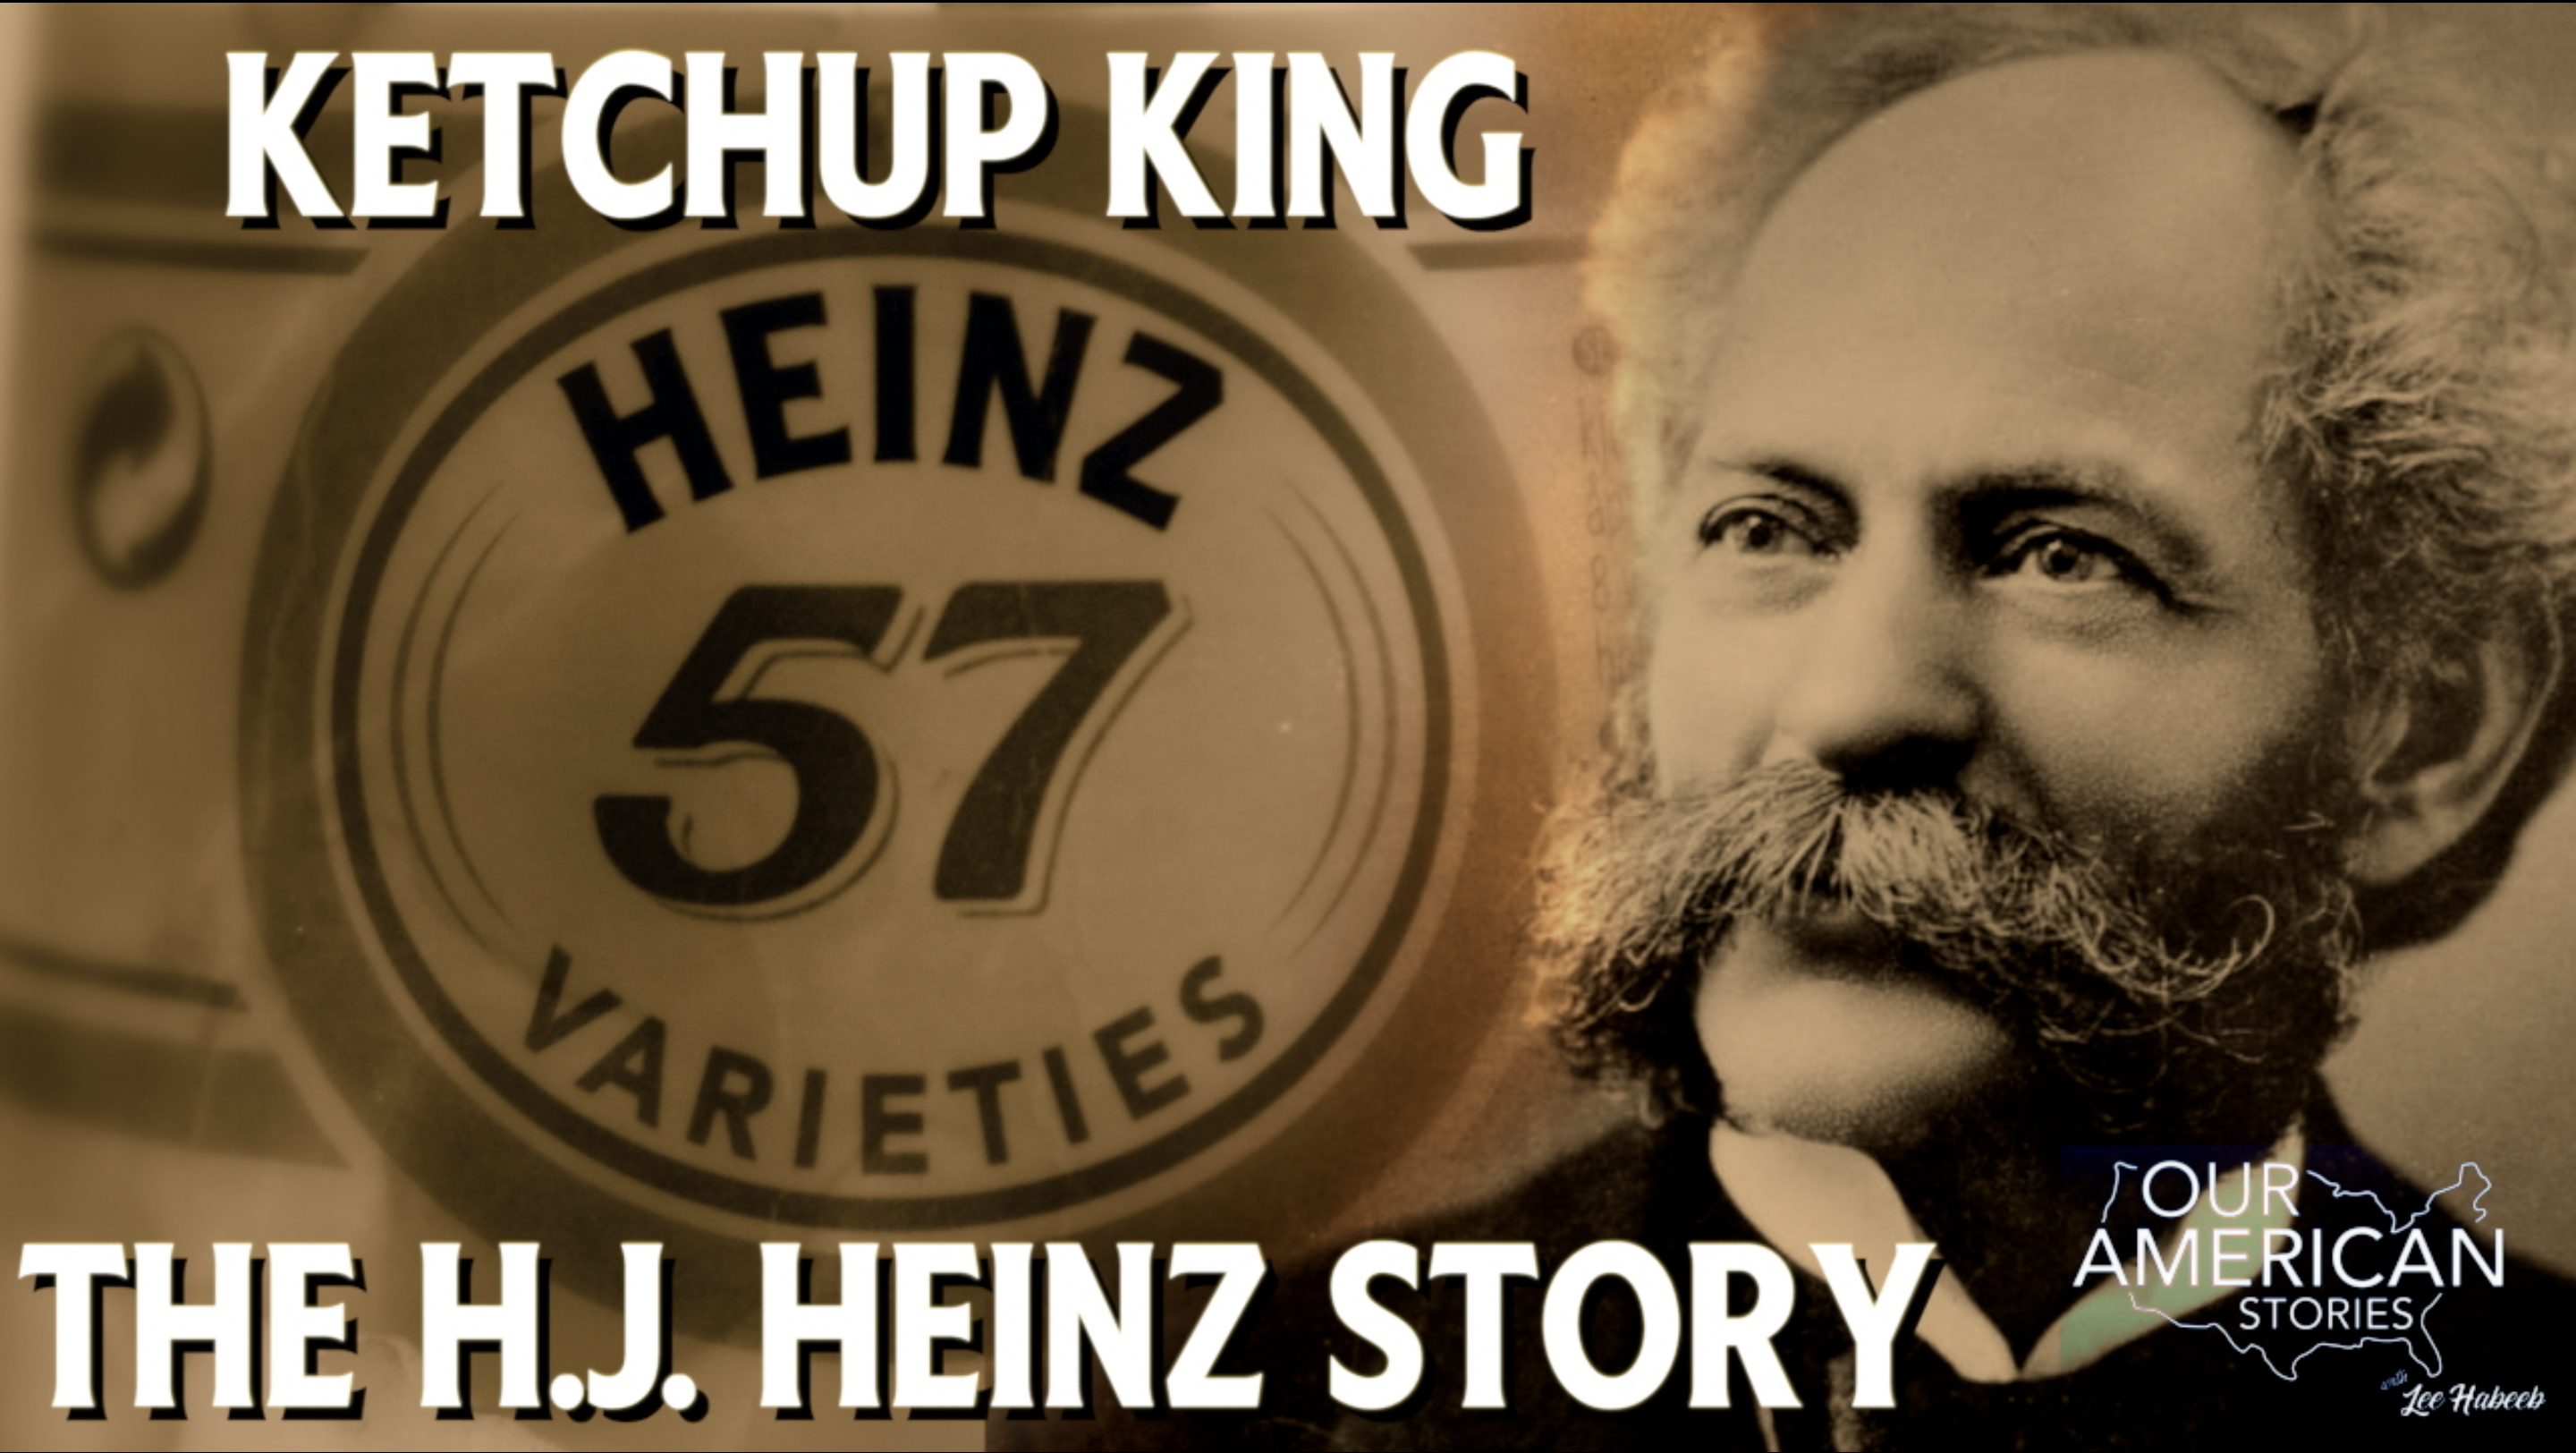 Ketchup King: The H.J. Heinz Story